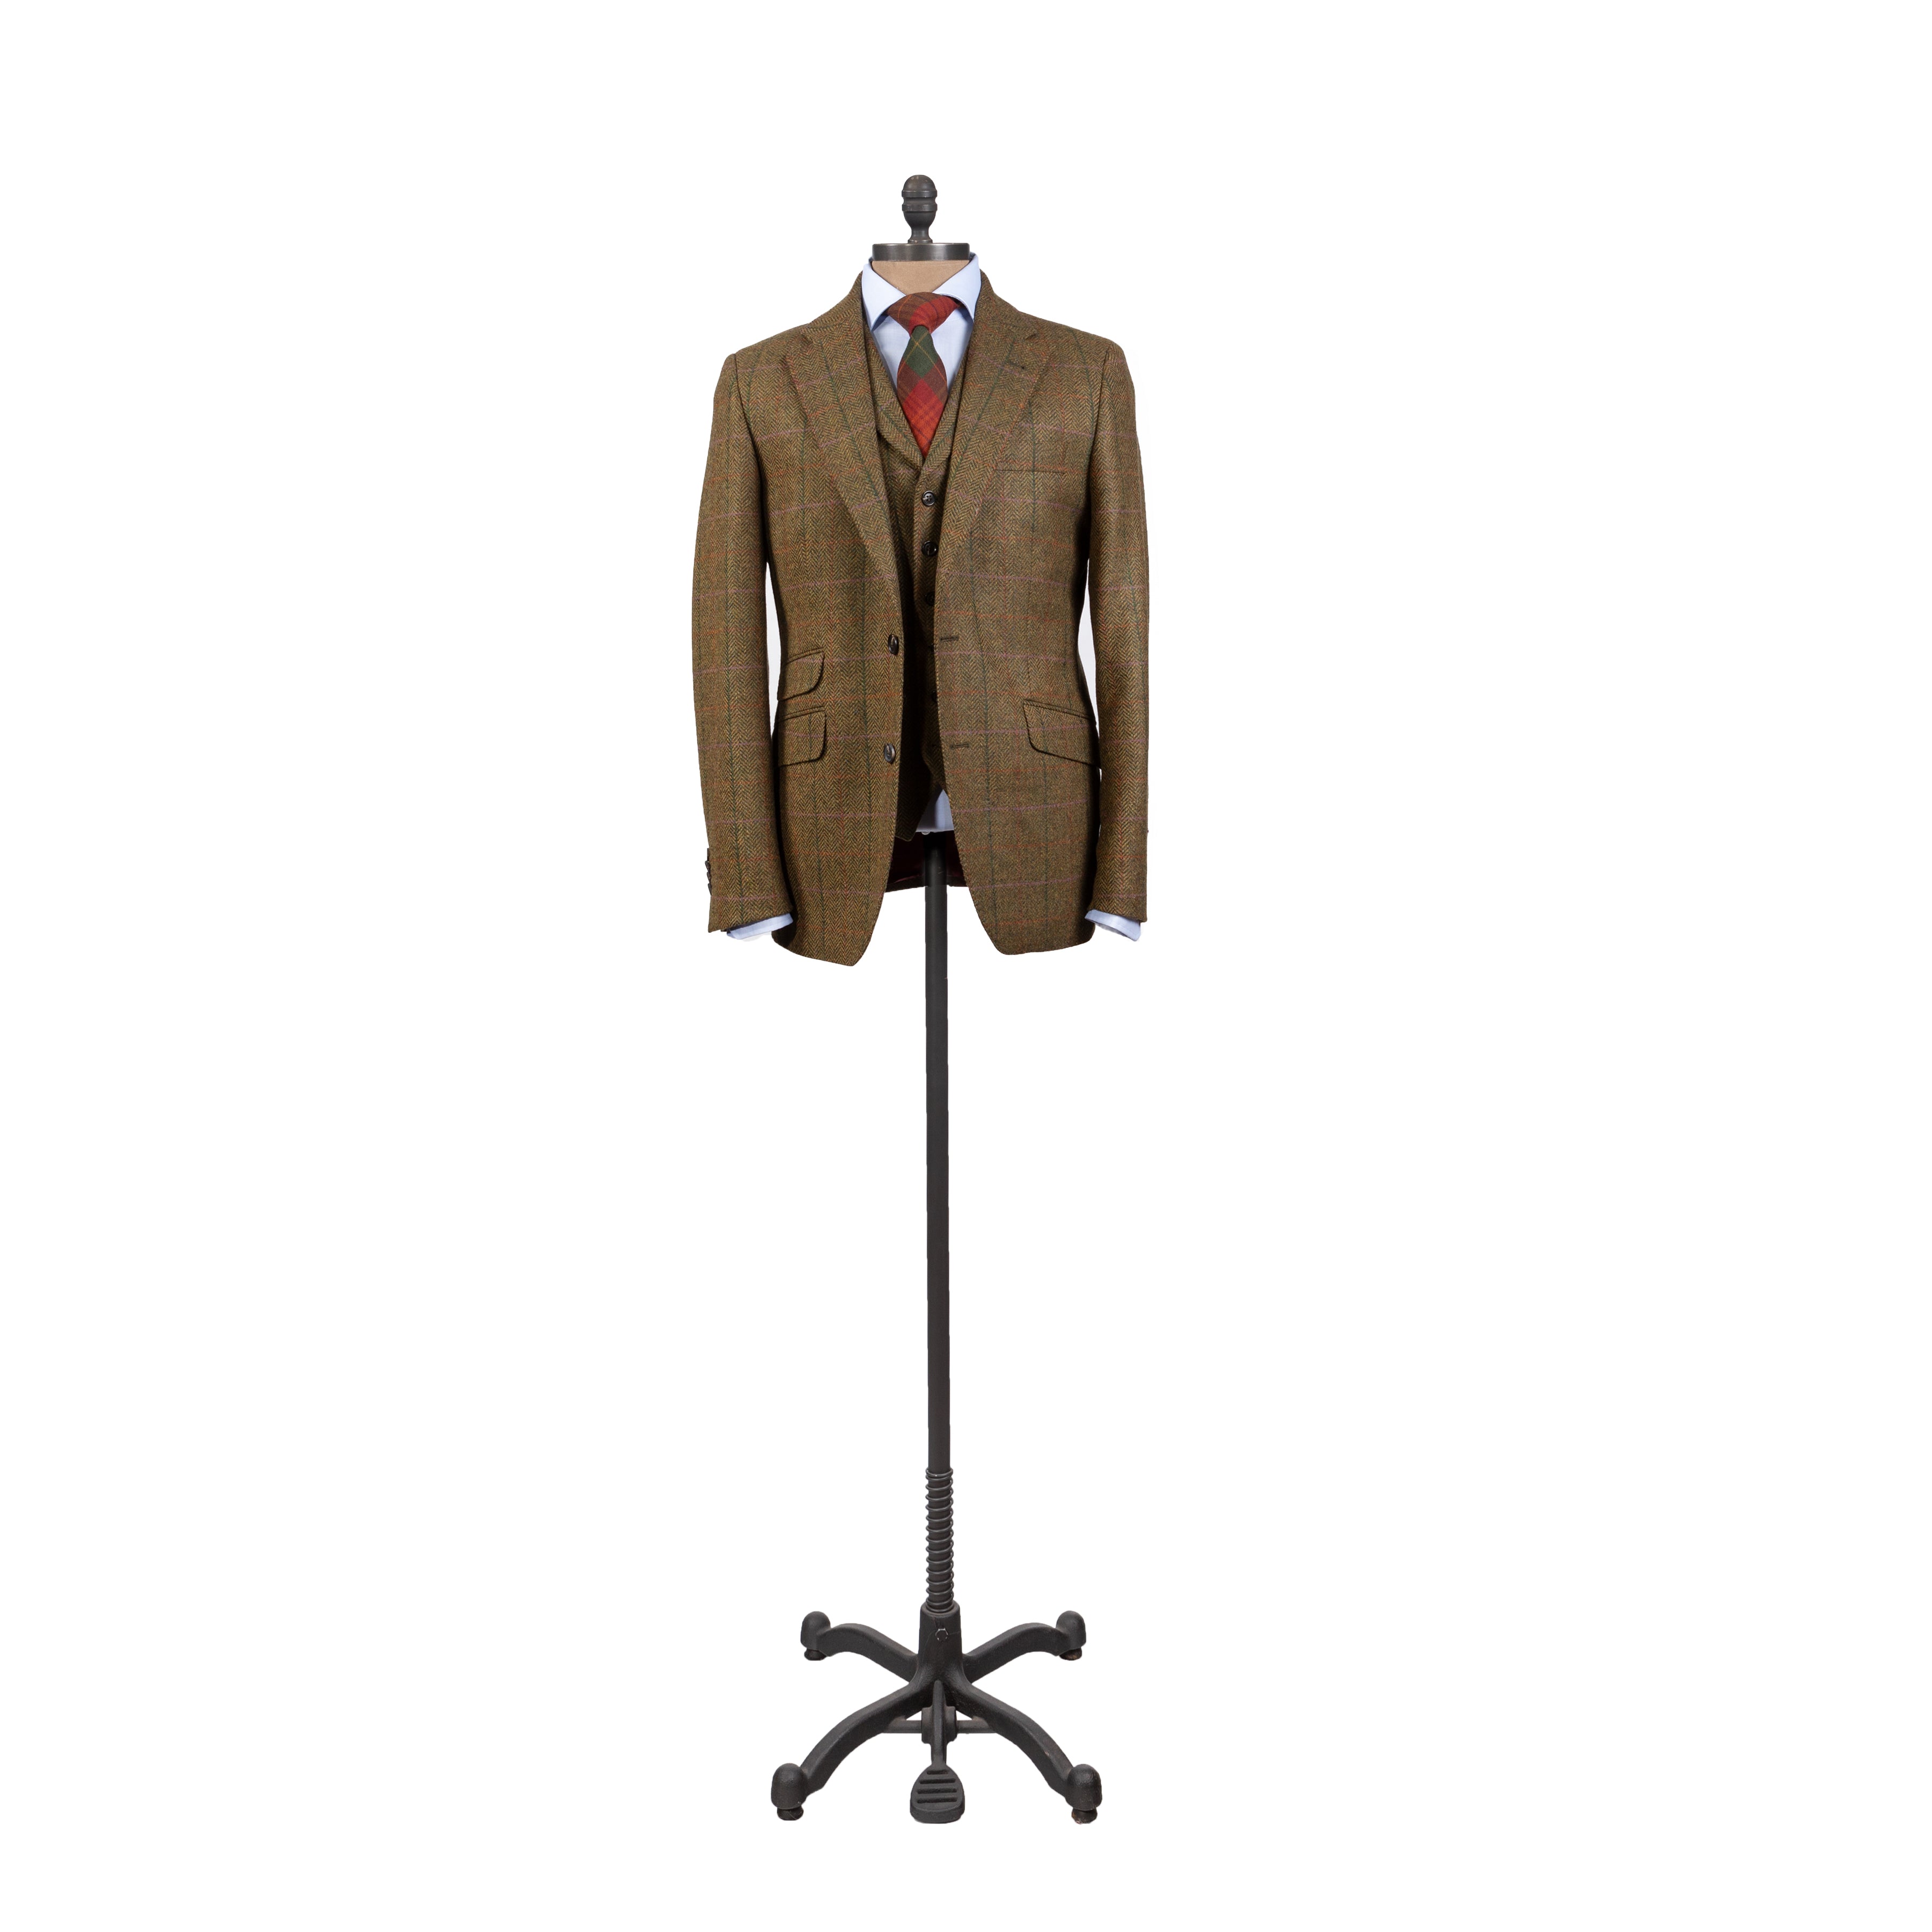 MacBeth 3pc Suit in Moss HB Multi Check